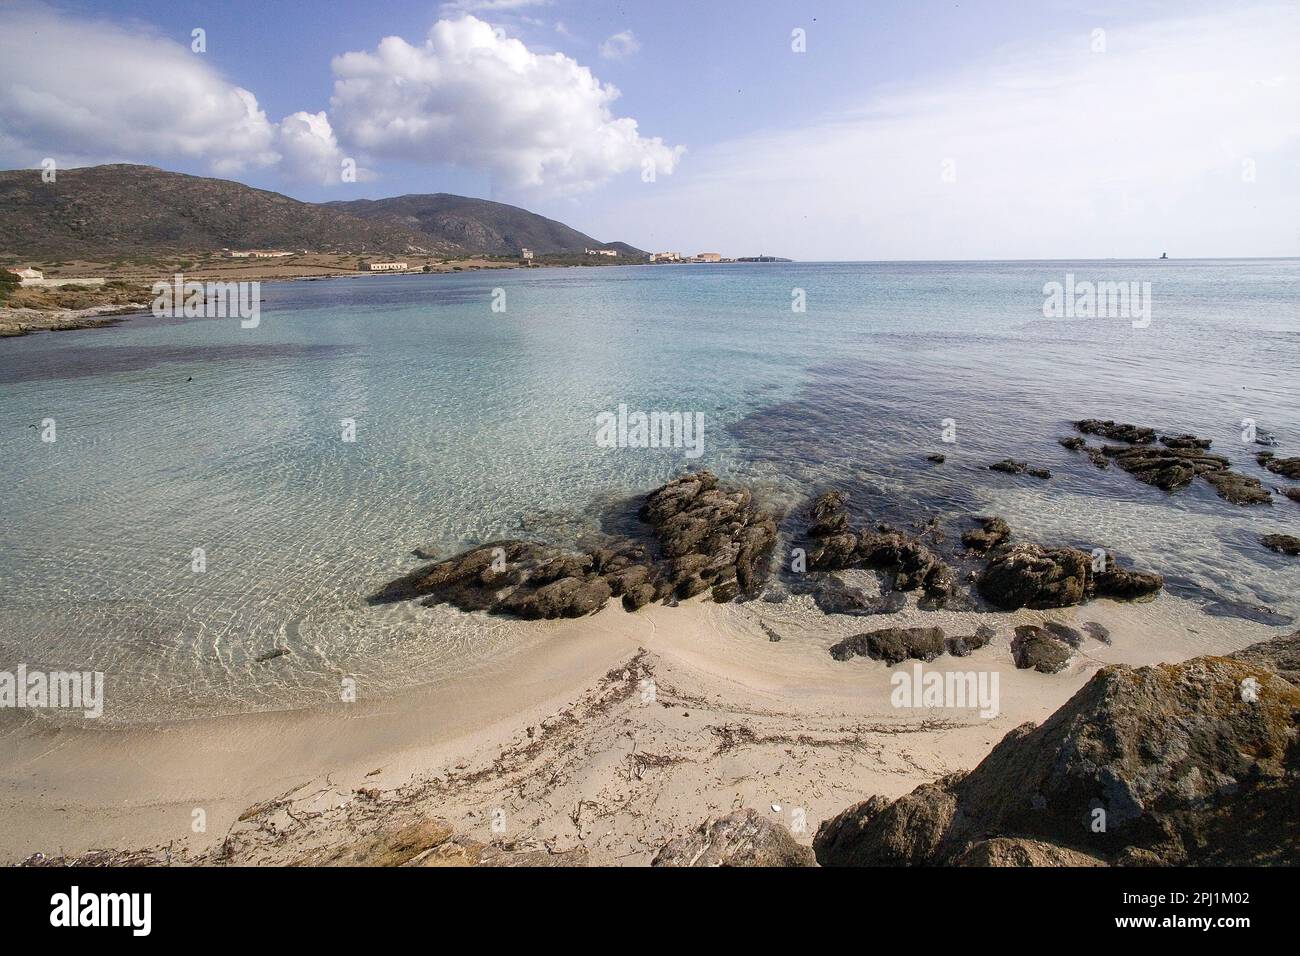 Spiaggia presso Cala Reale. Isola dell'Asinara. Sassari, Sardegna. Italia Stock Photo